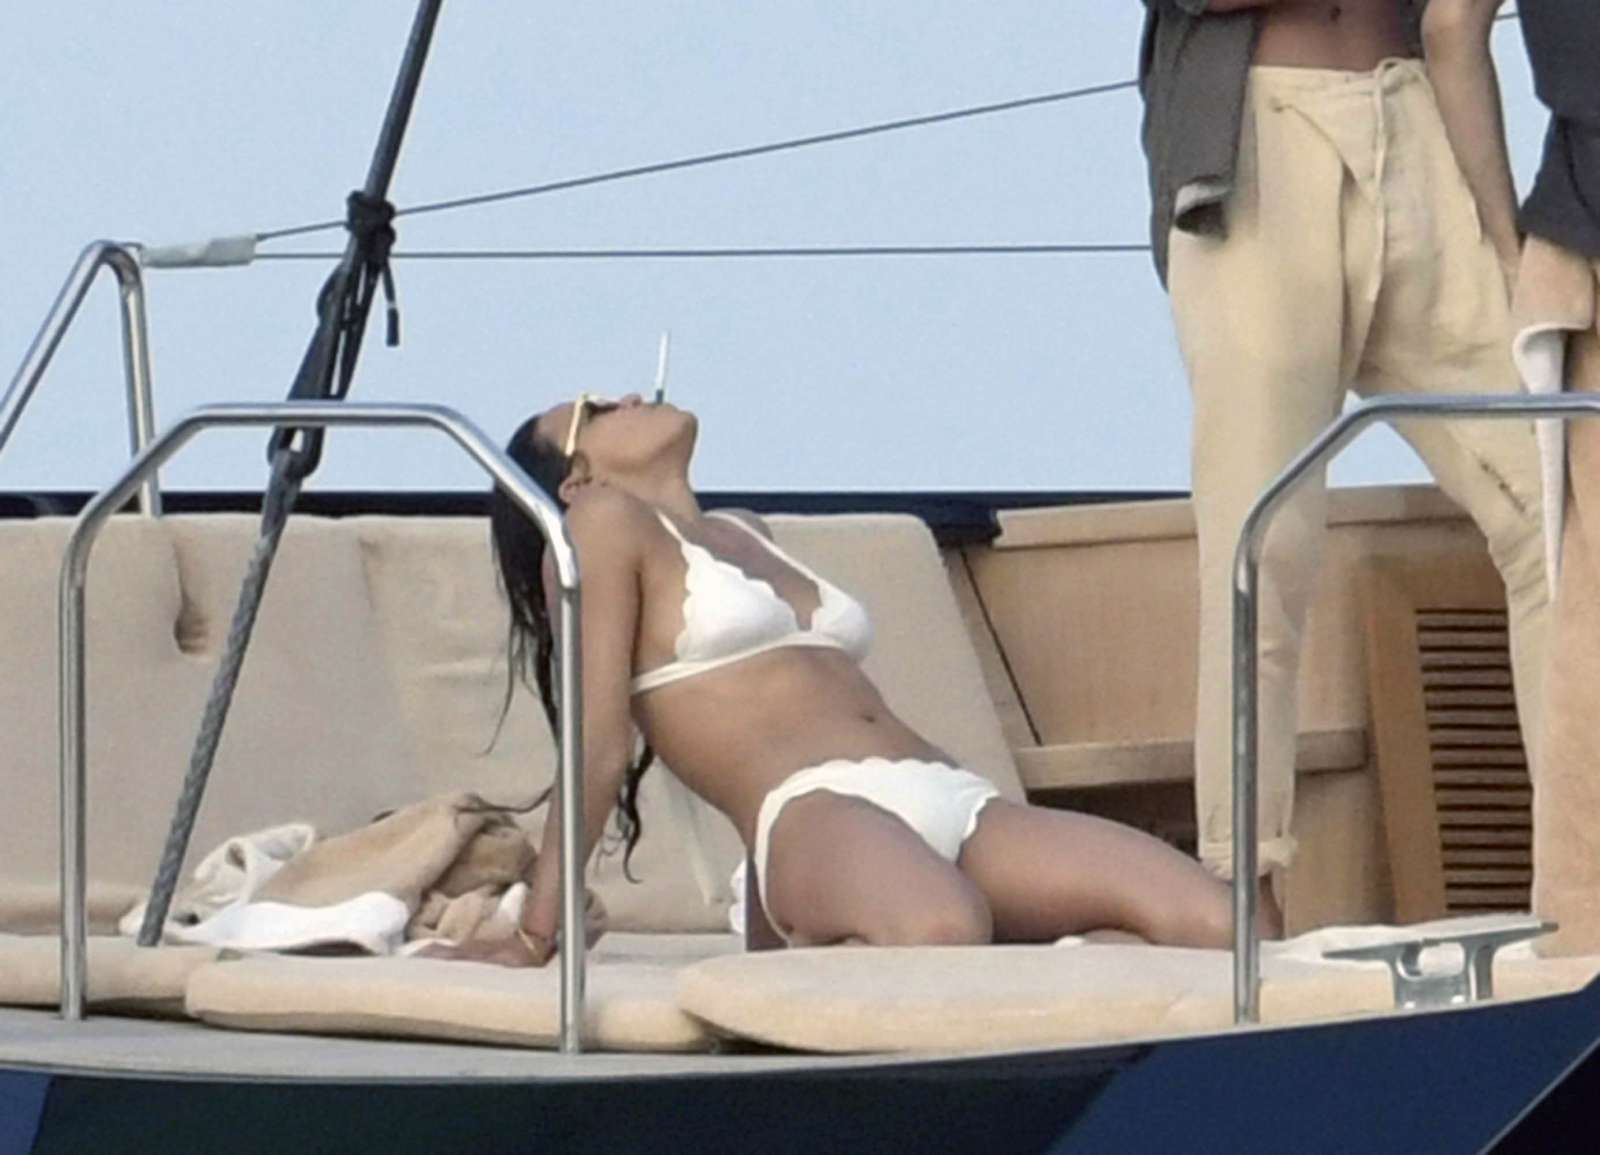 Michelle Rodriguez in White Bikini at the boat in Italy